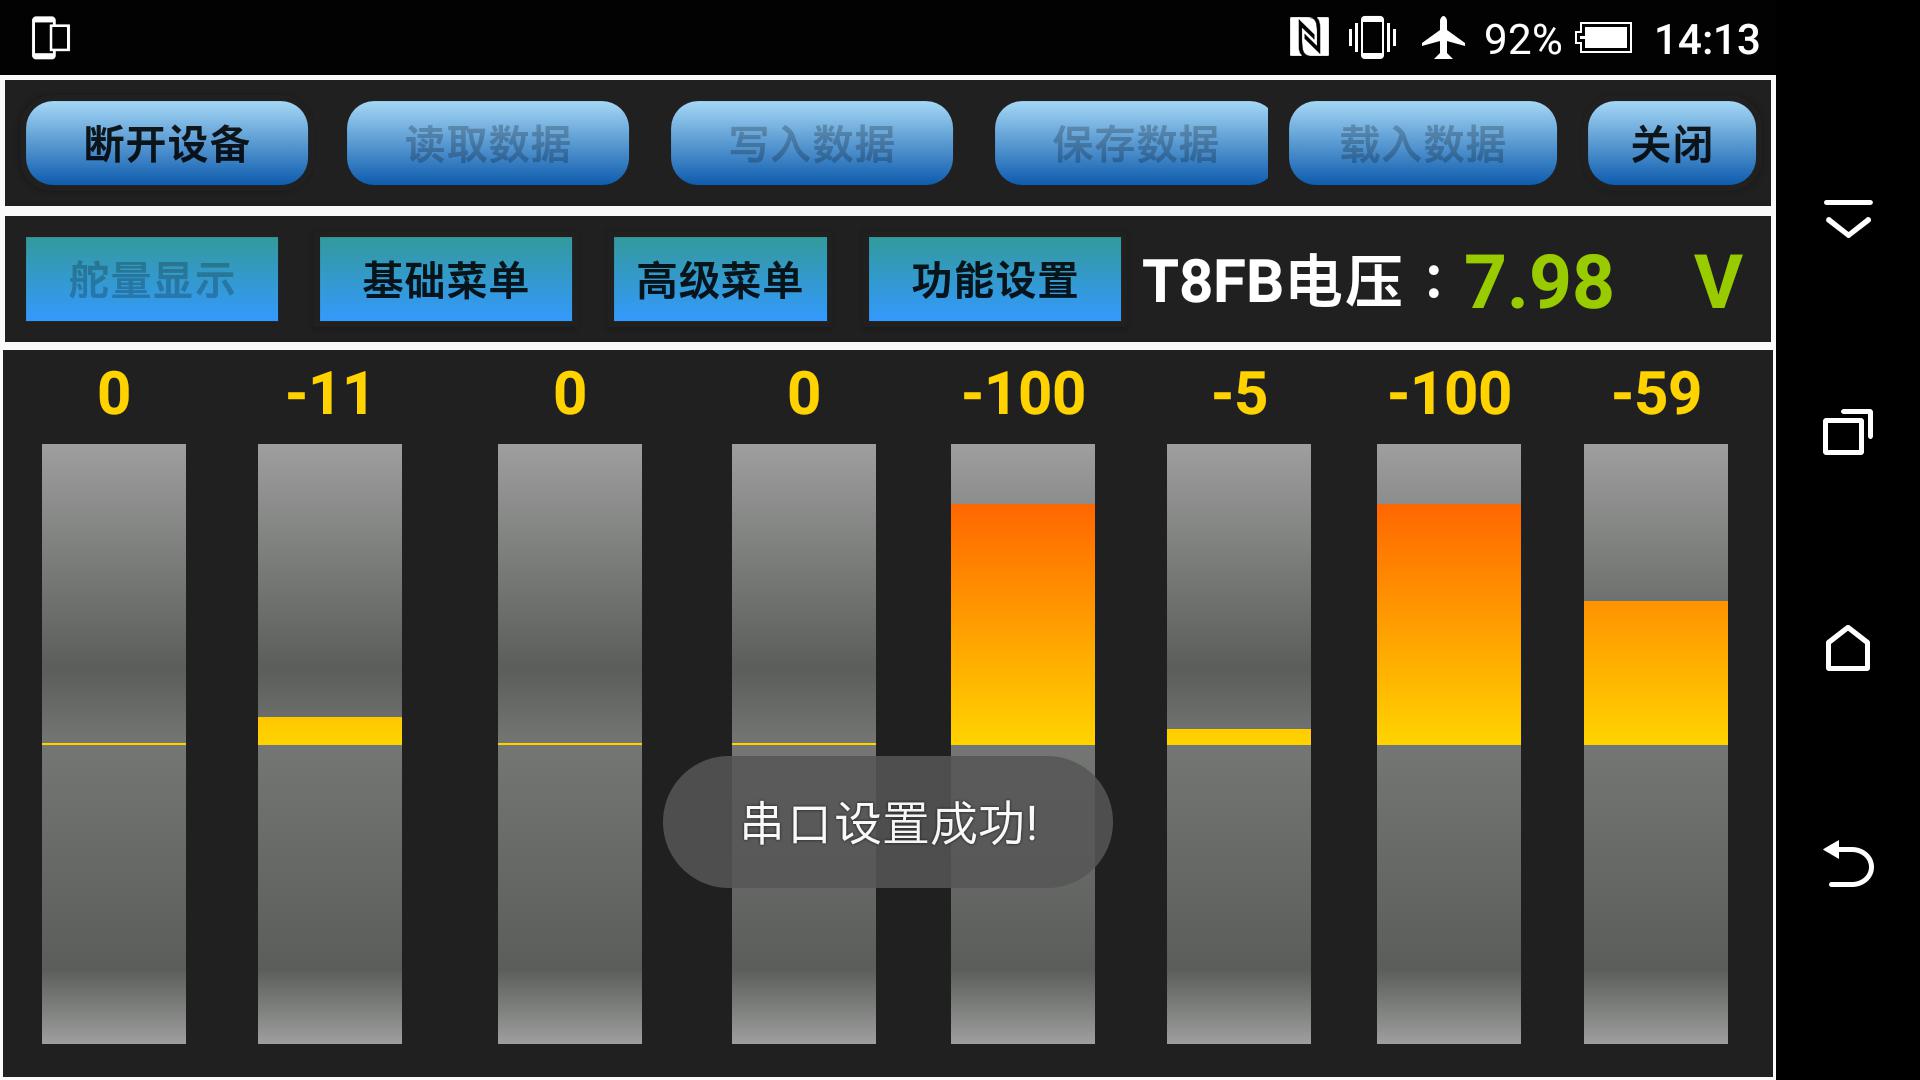 T8FB手机app调试方法步骤 电池,遥控器,固件 作者:乐迪support 1631 